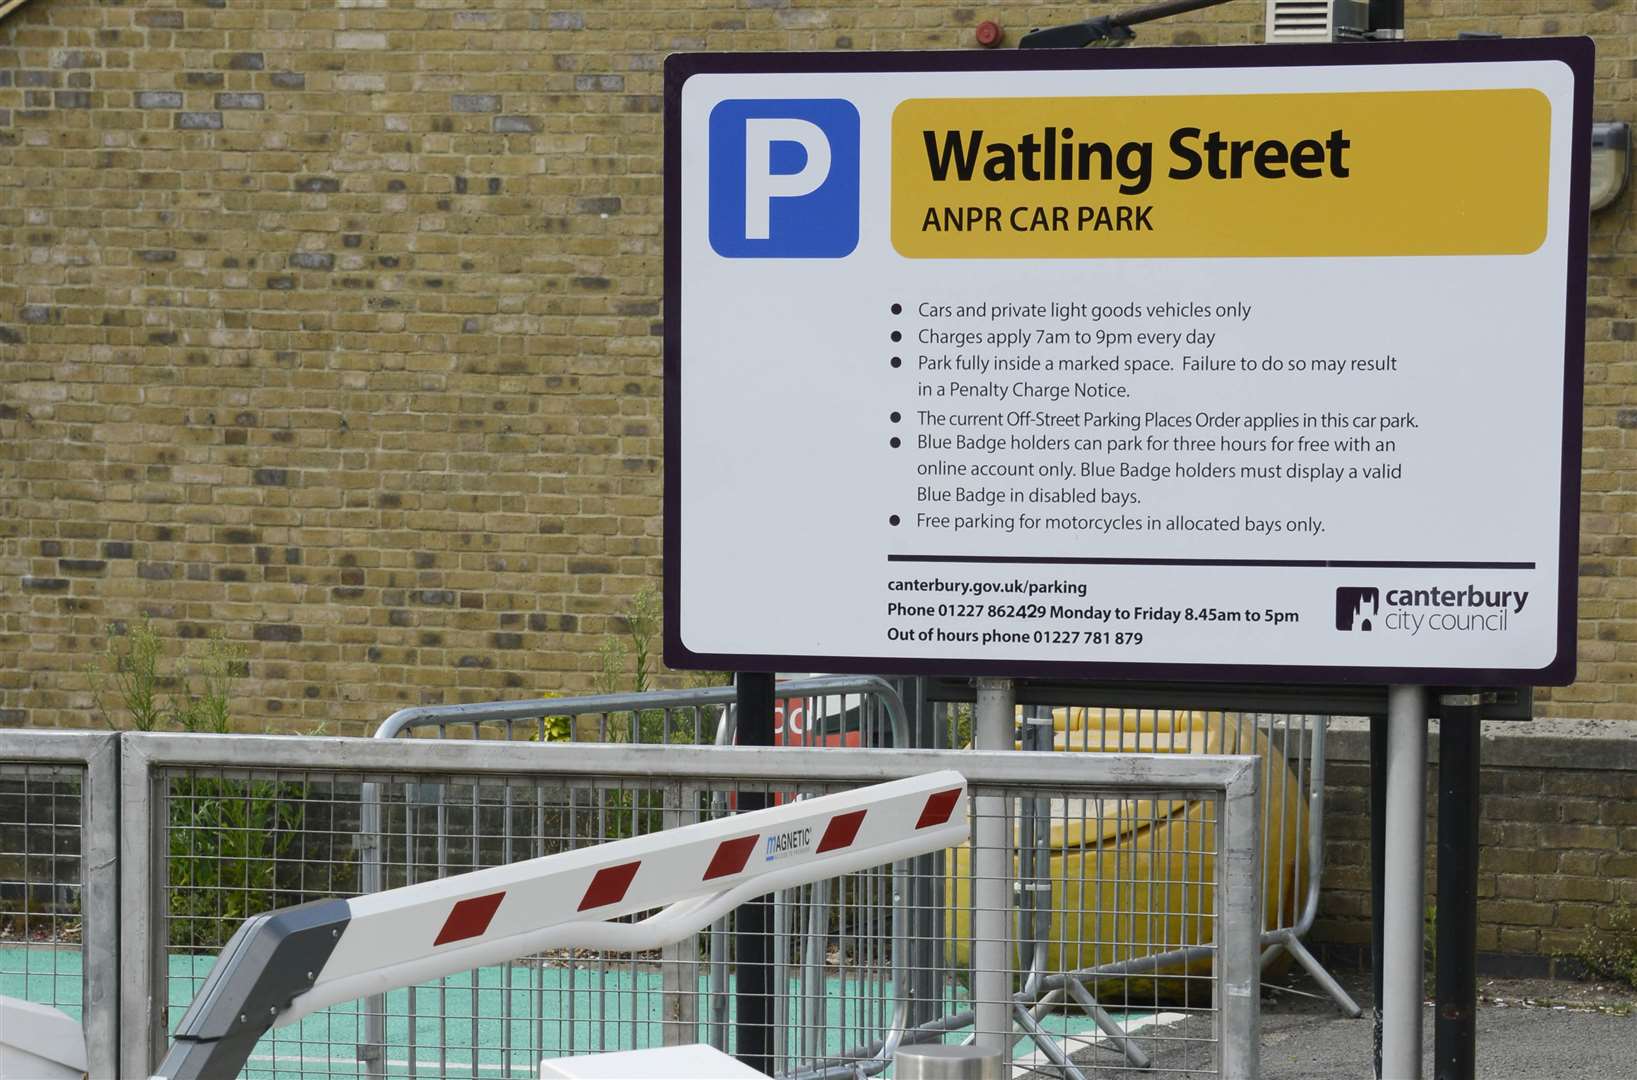 Canterbury's Watling Street car park has ANPR technology